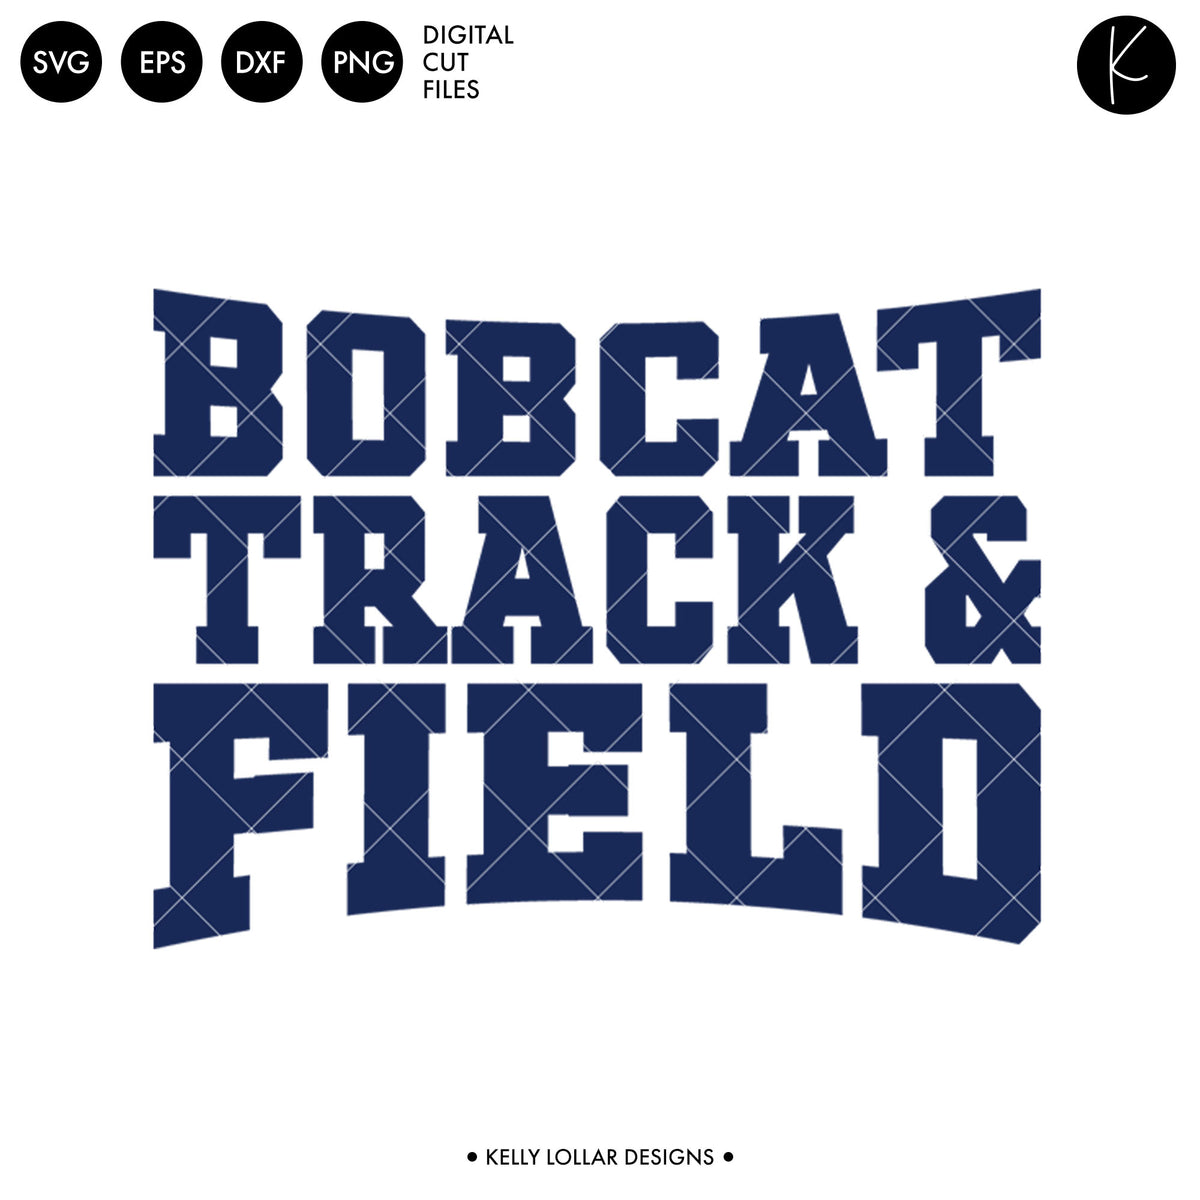 Bobcats Track &amp; Field Bundle | SVG DXF EPS PNG Cut Files